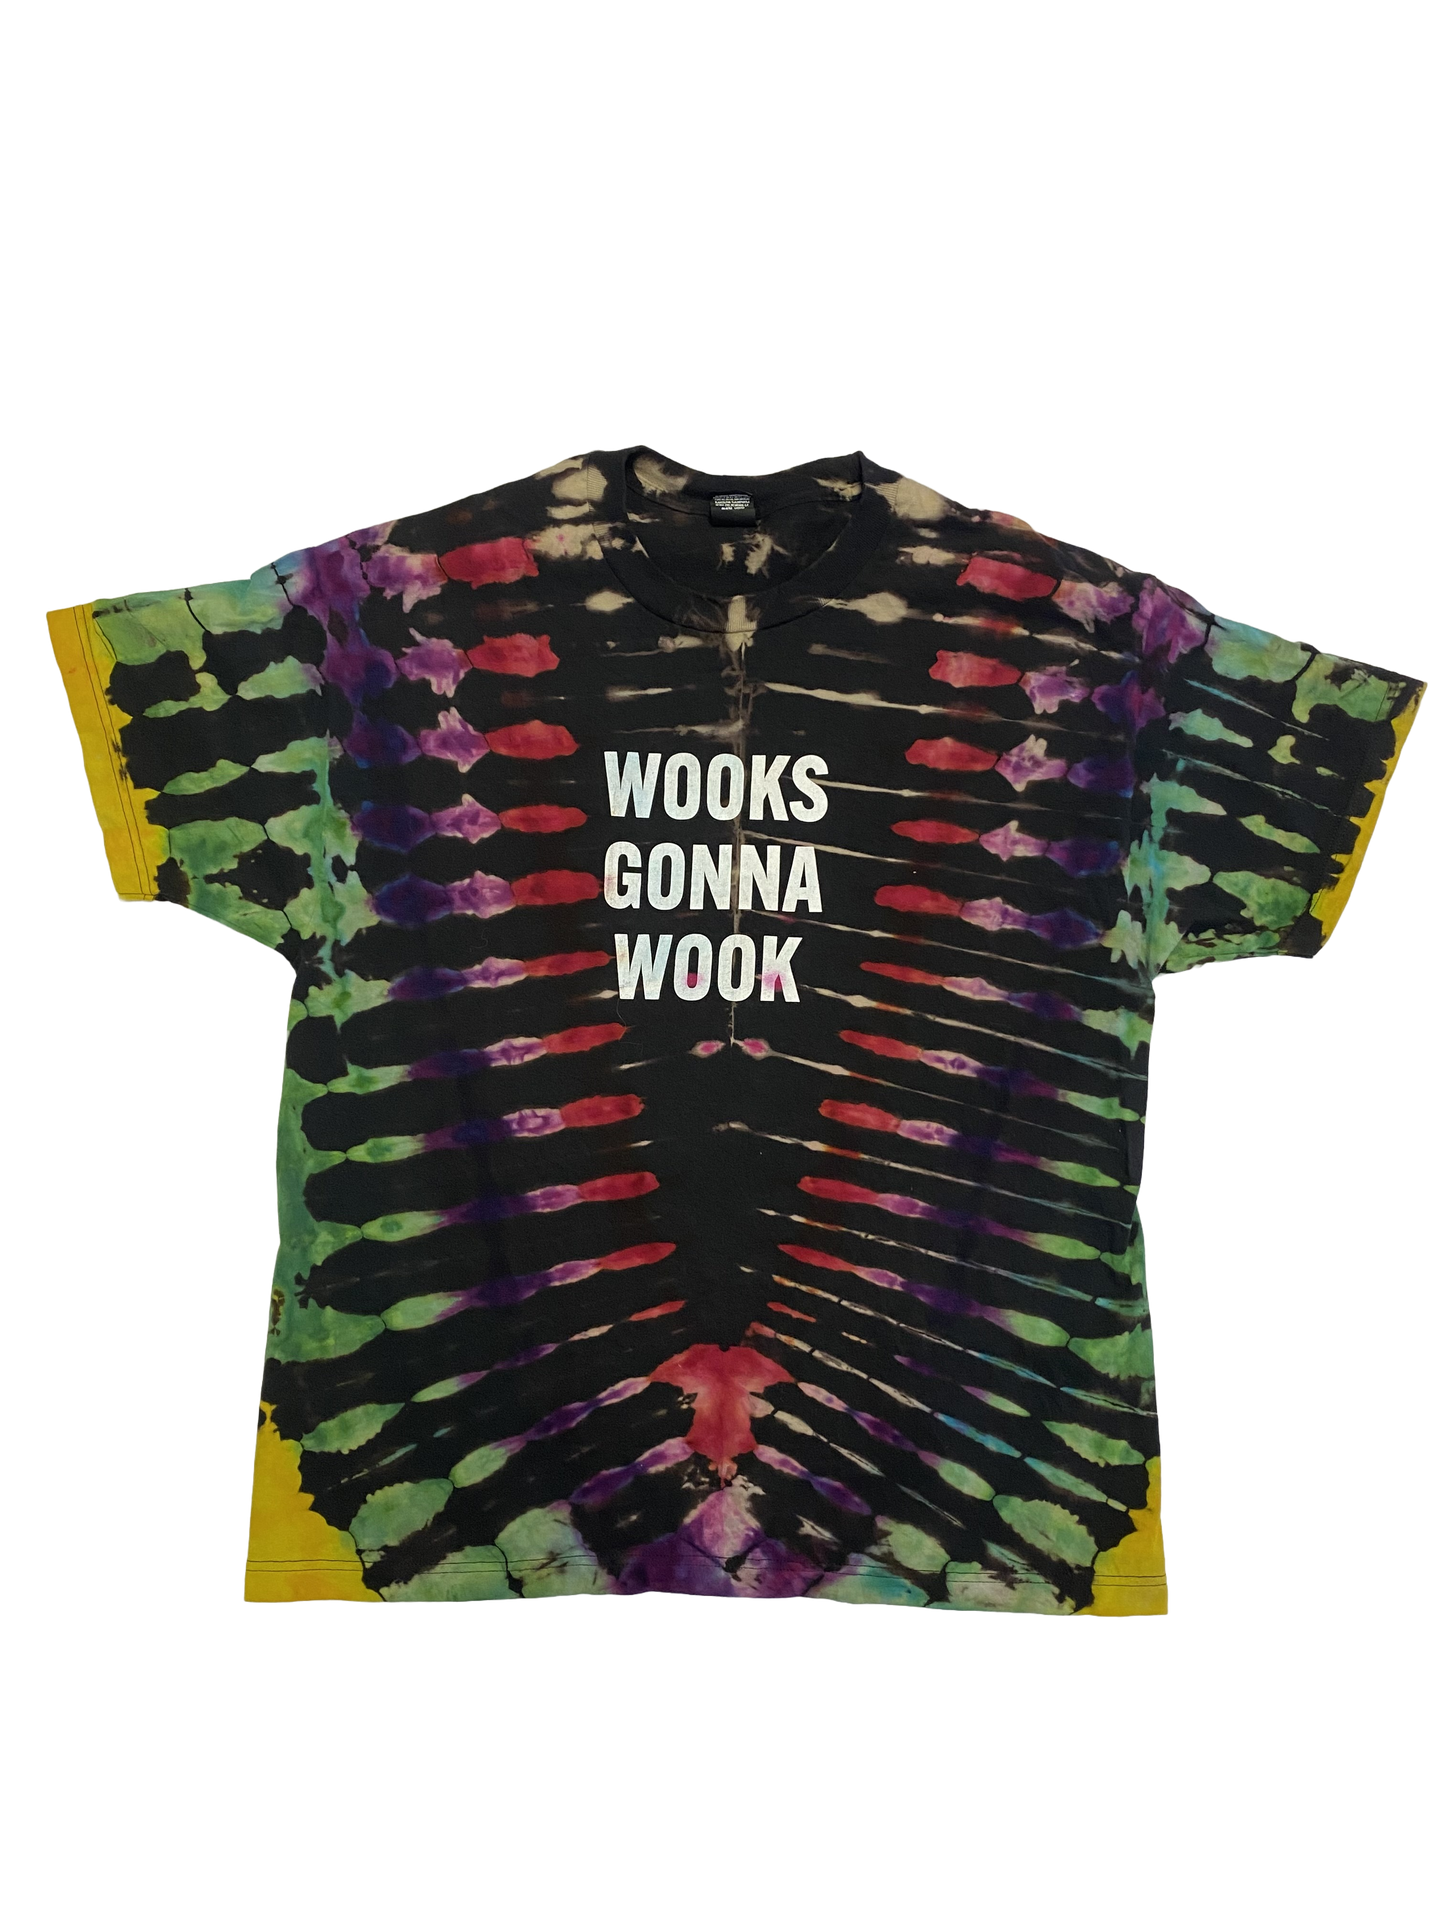 Wooks (XL)